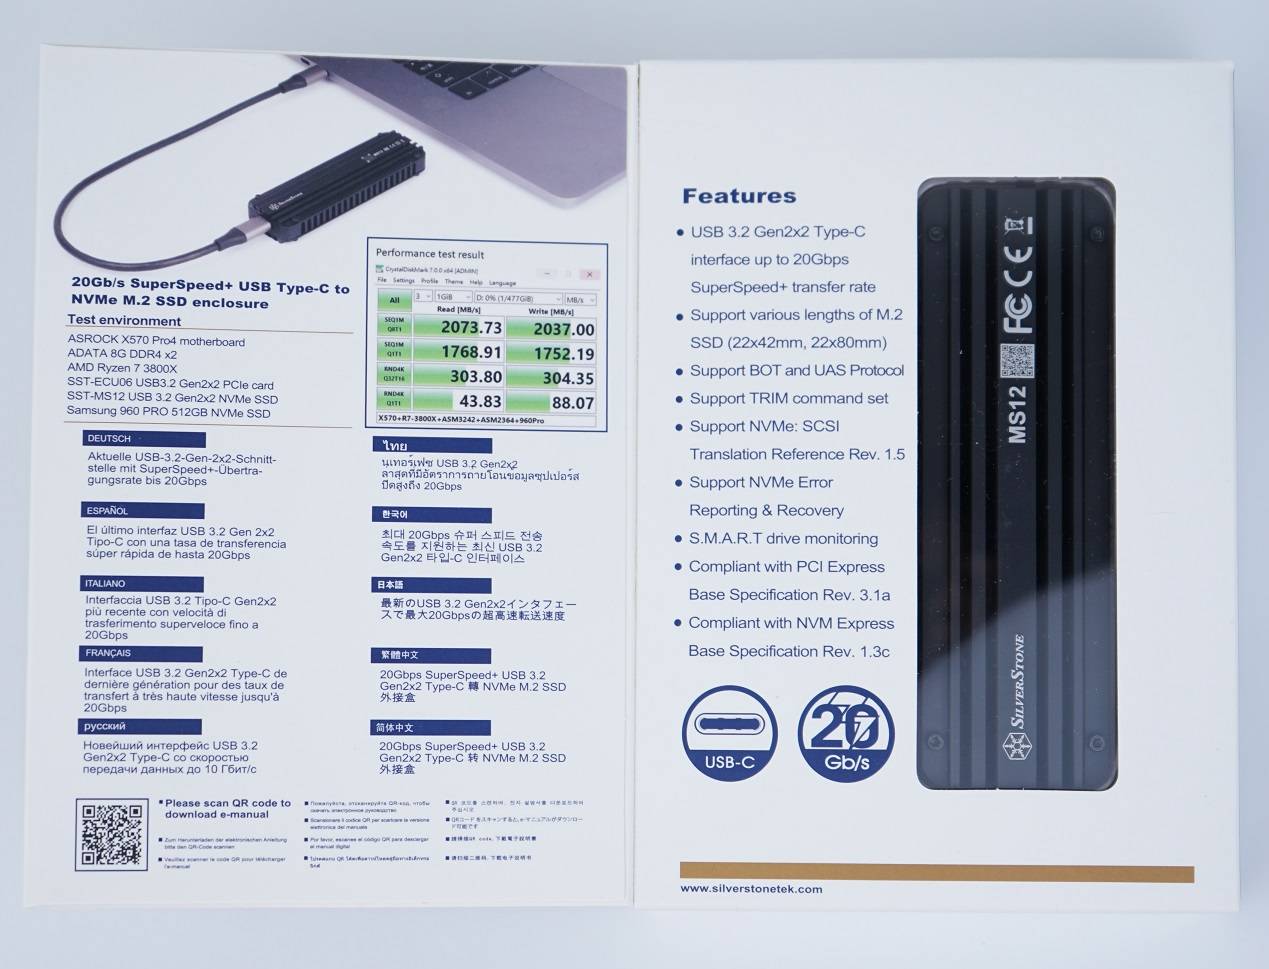 SilverStone MS12 External M.2 SSD Enclosure